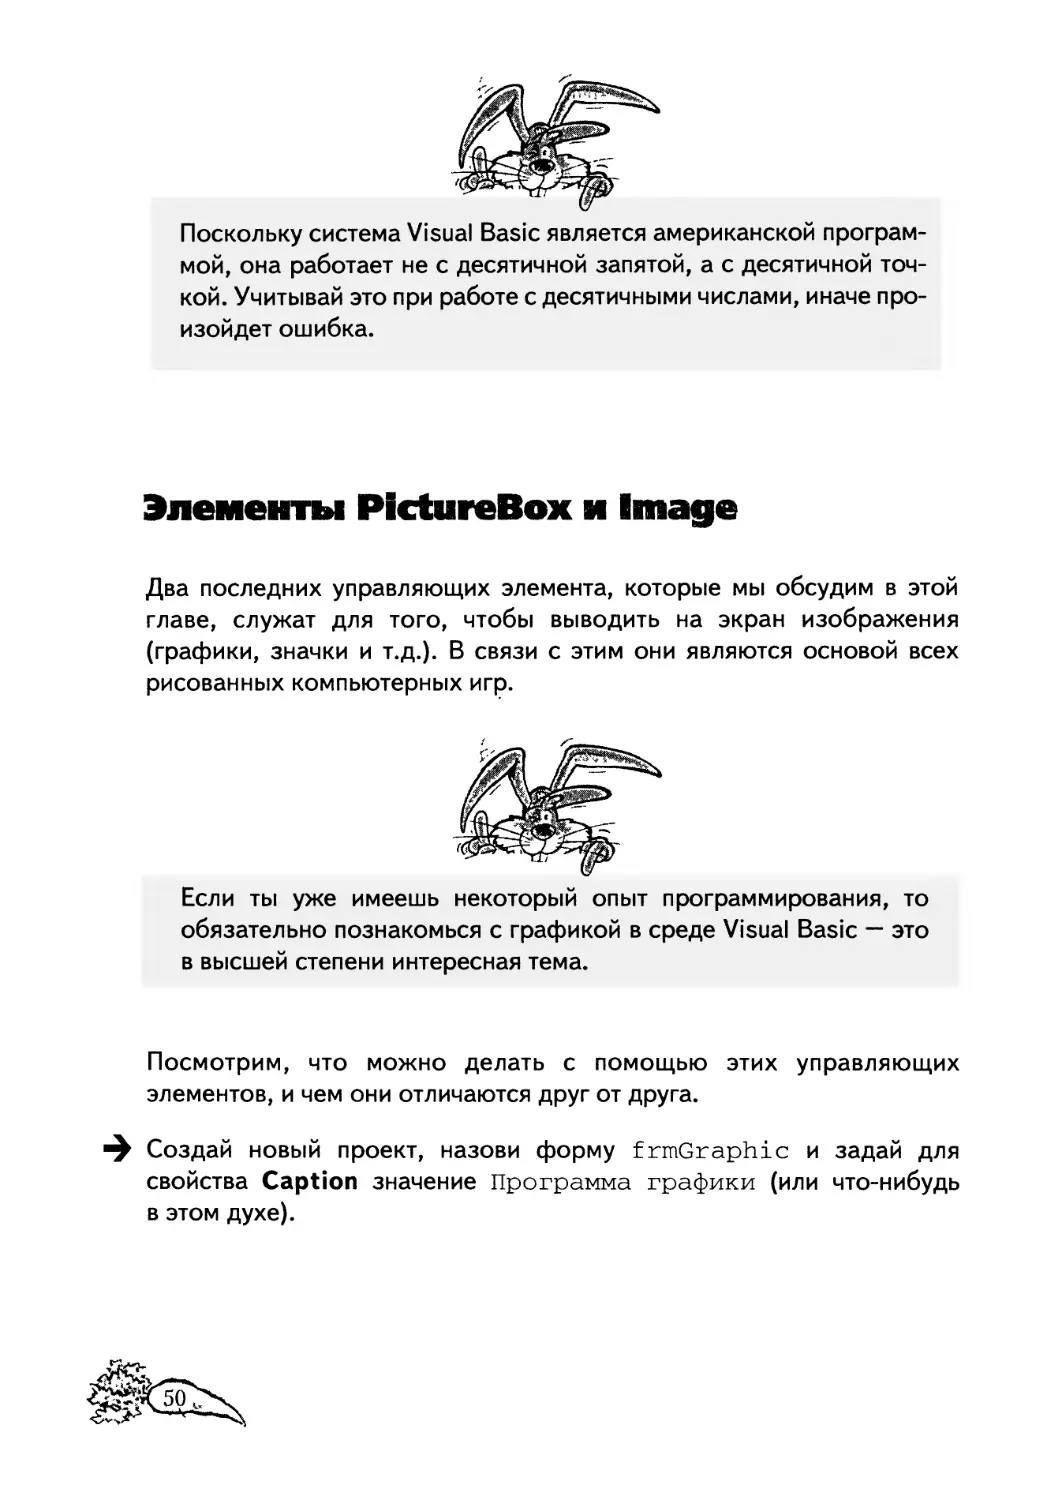 Элементы PictureBox и Image